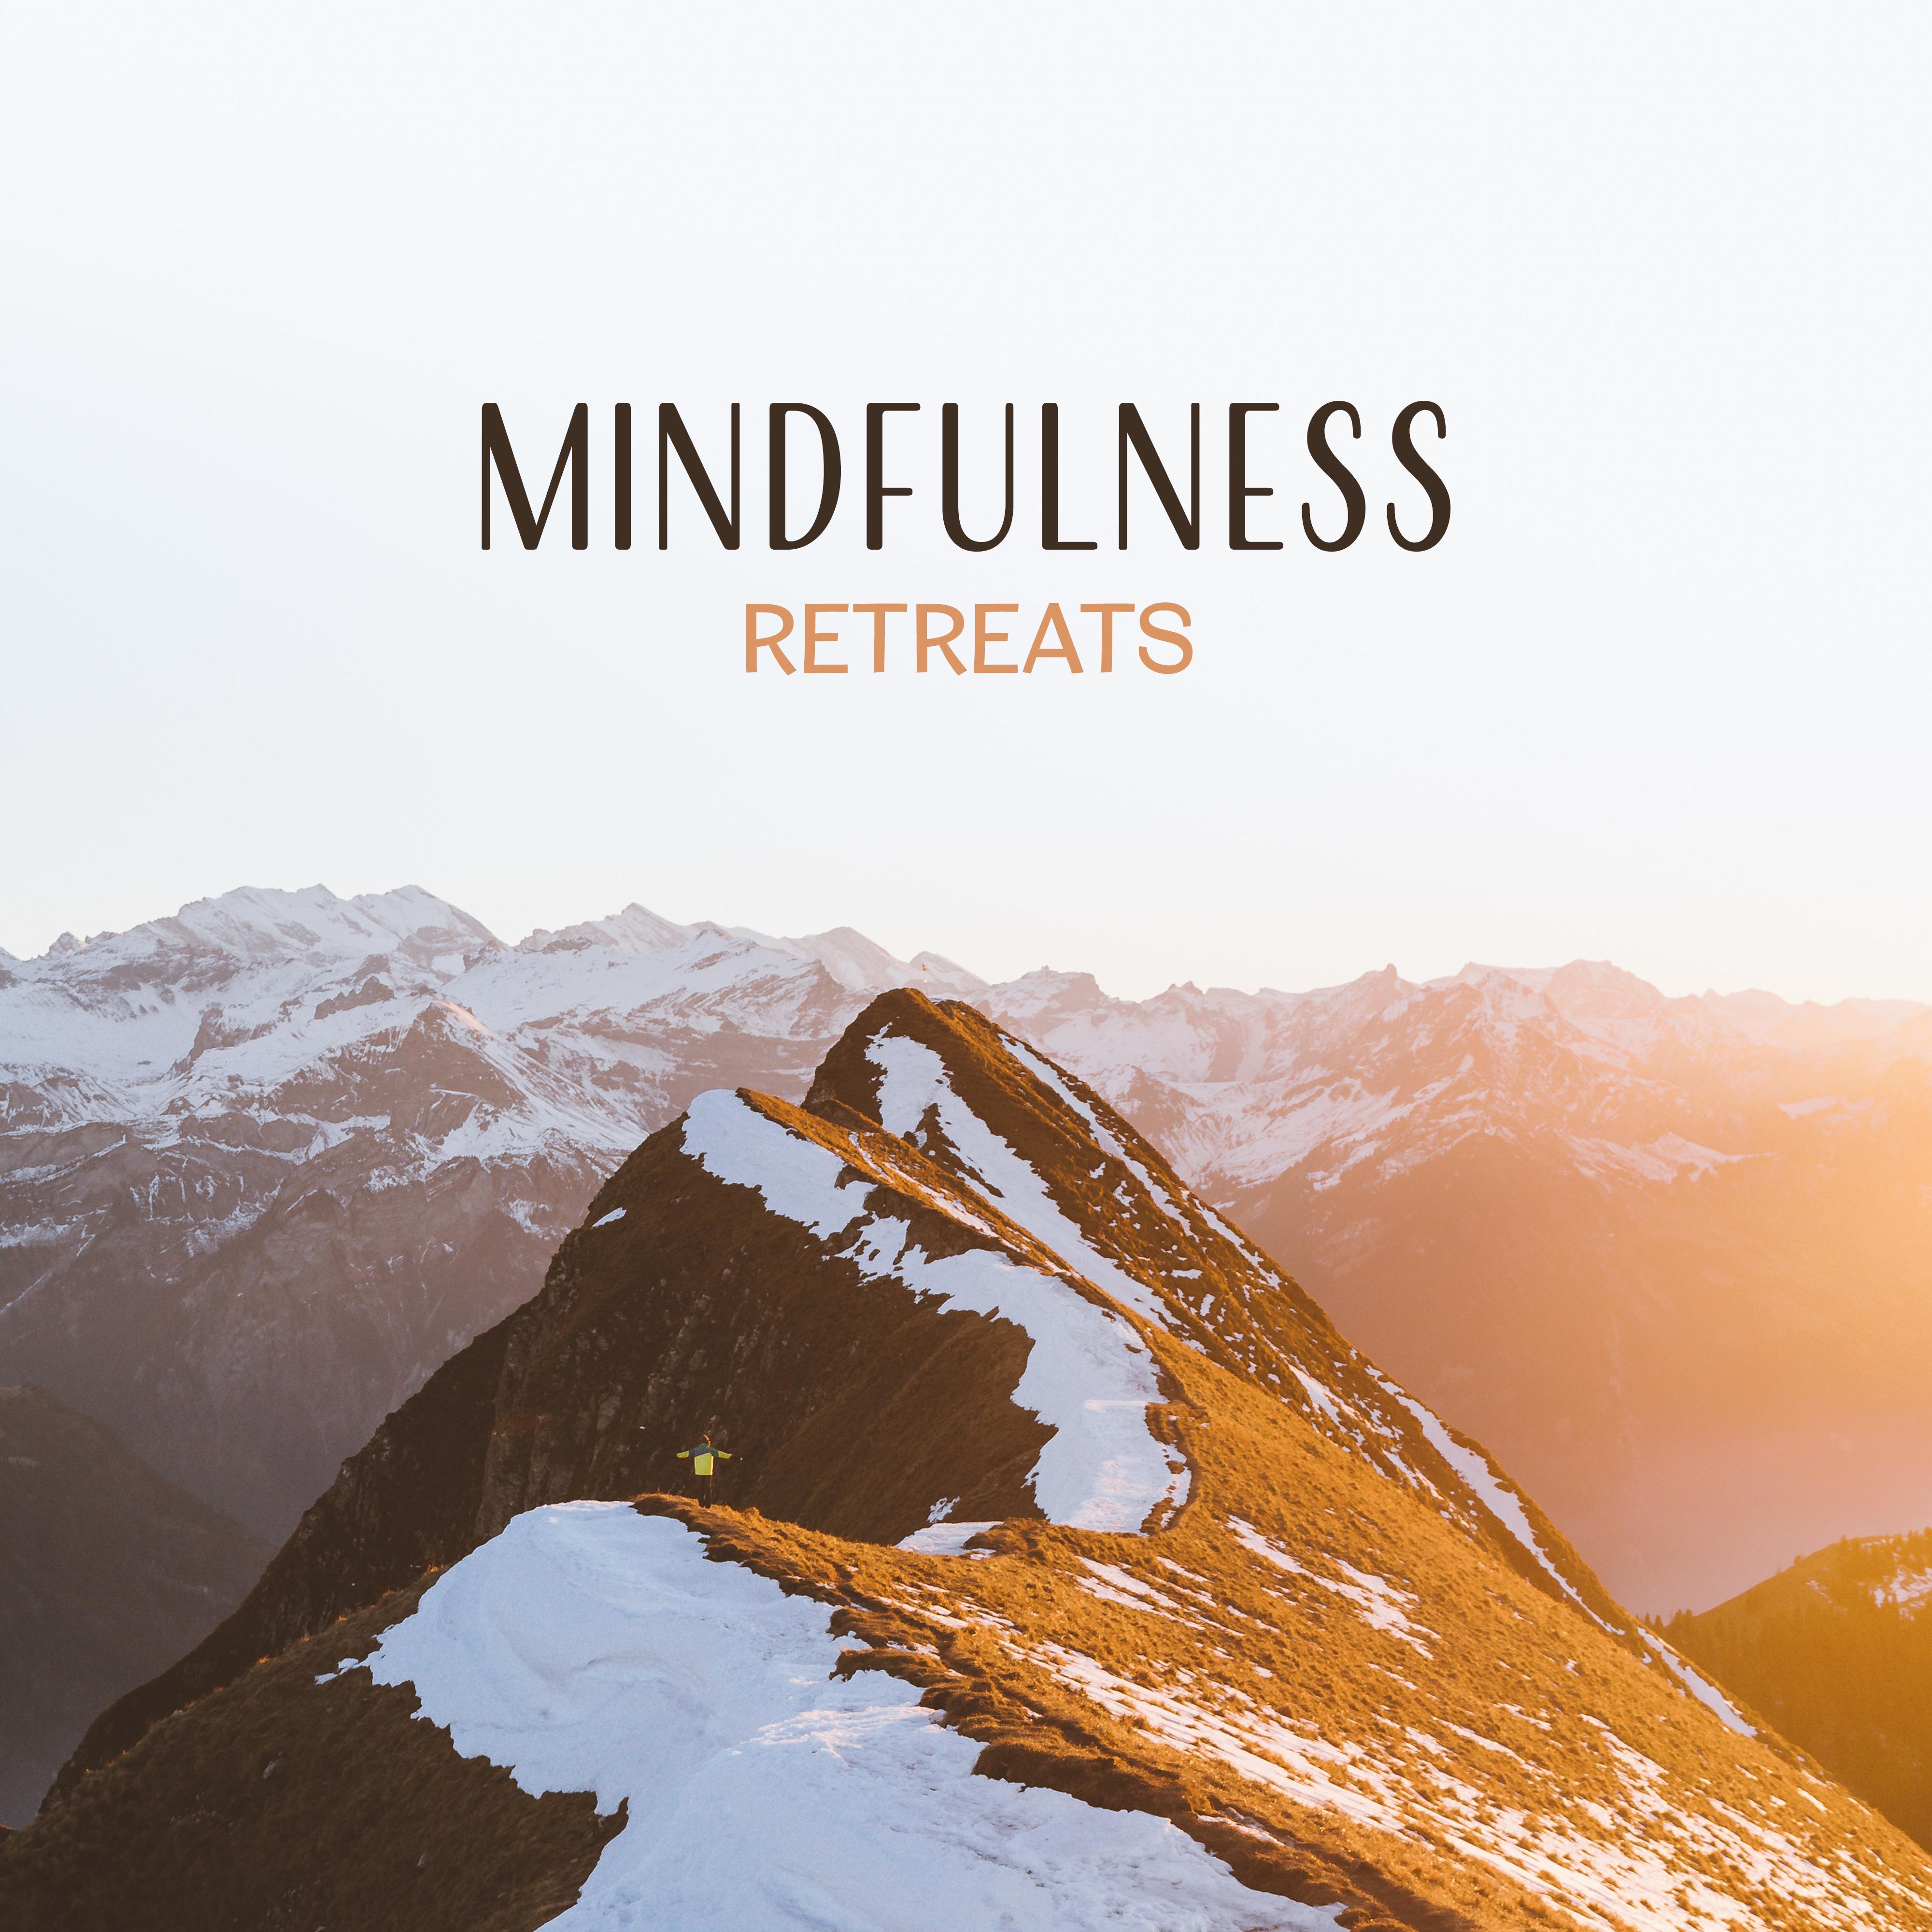 Mindfulness Retreats – New Age Sounds for Meditation, Be Mindful, Yoga Music, Zen Power, Healing Reiki